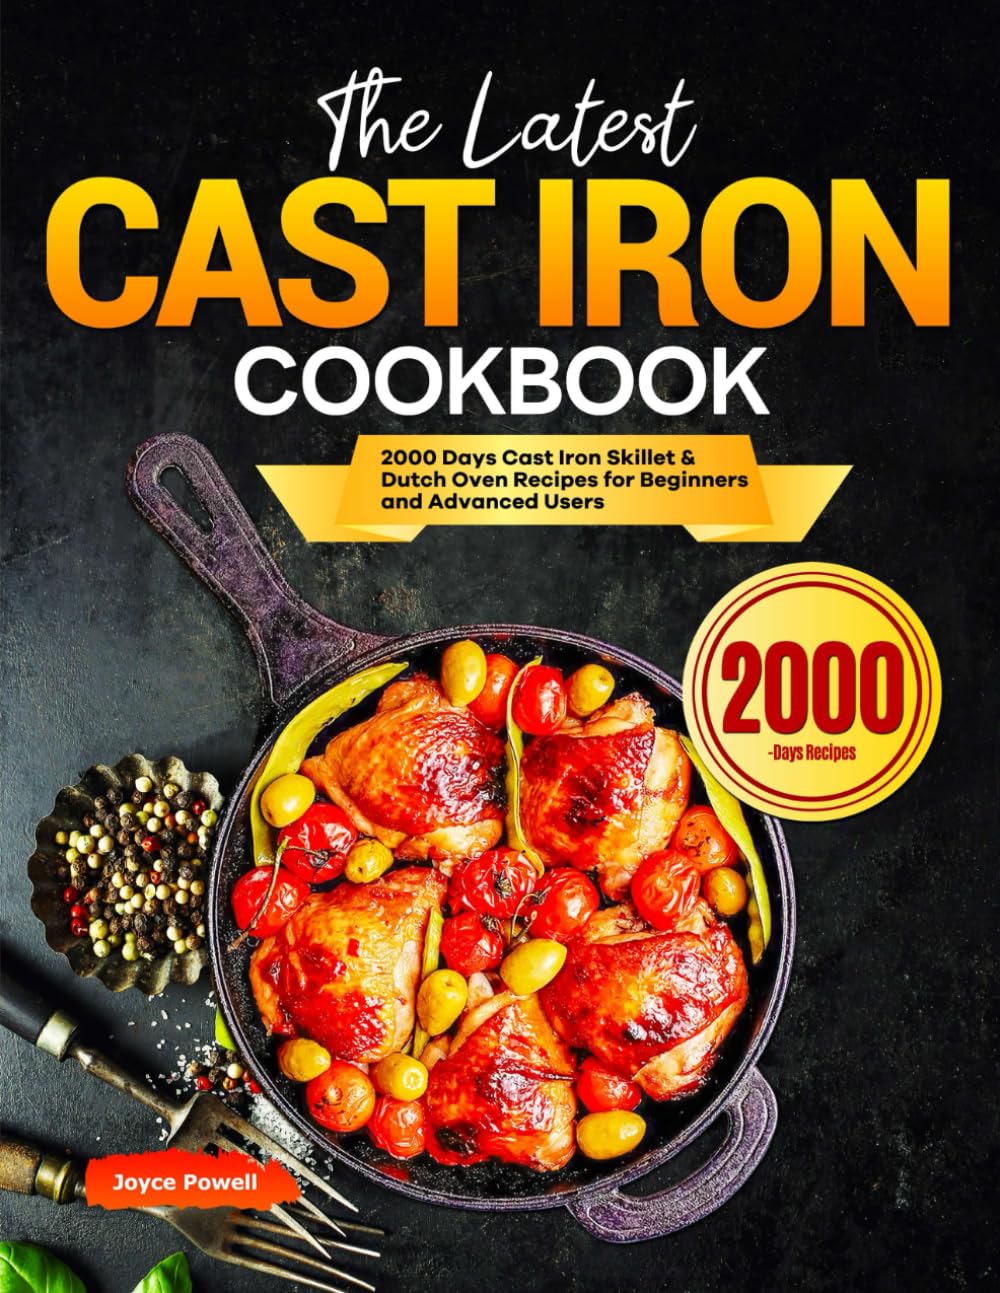 2000 days cast iron cookbook review